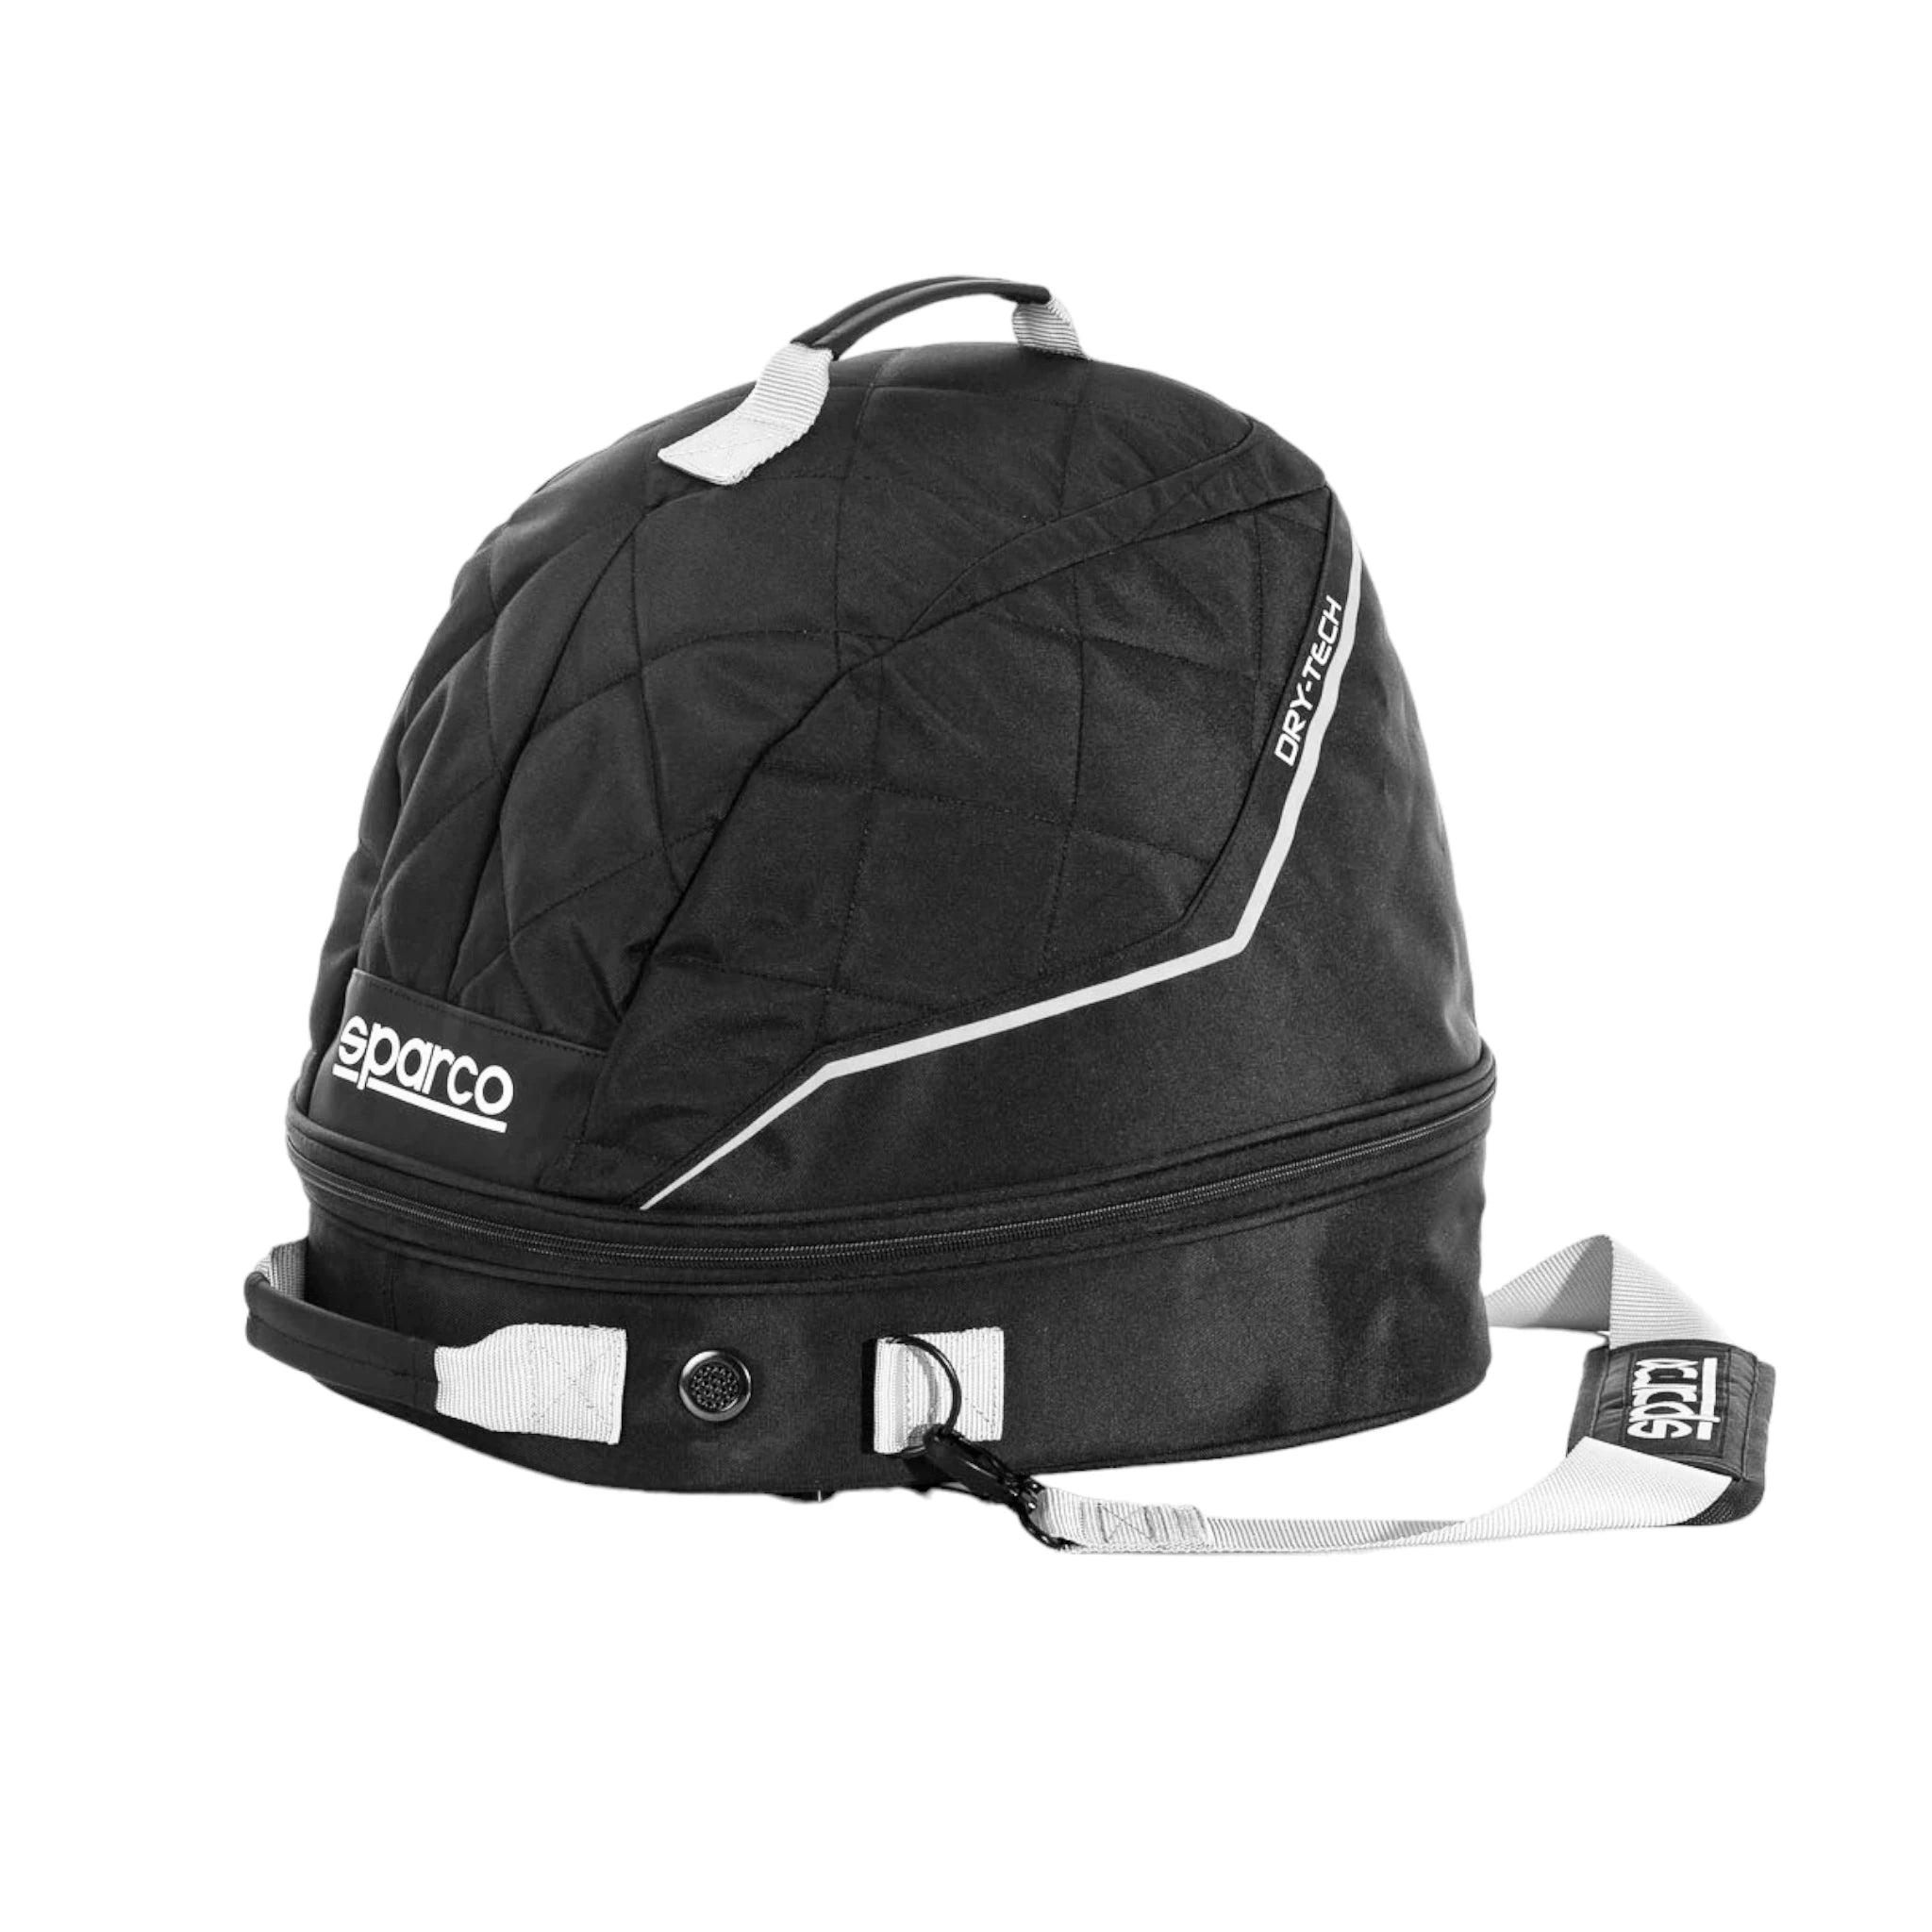 HelmetbagSparcoDry-Techwithfansystem.webp